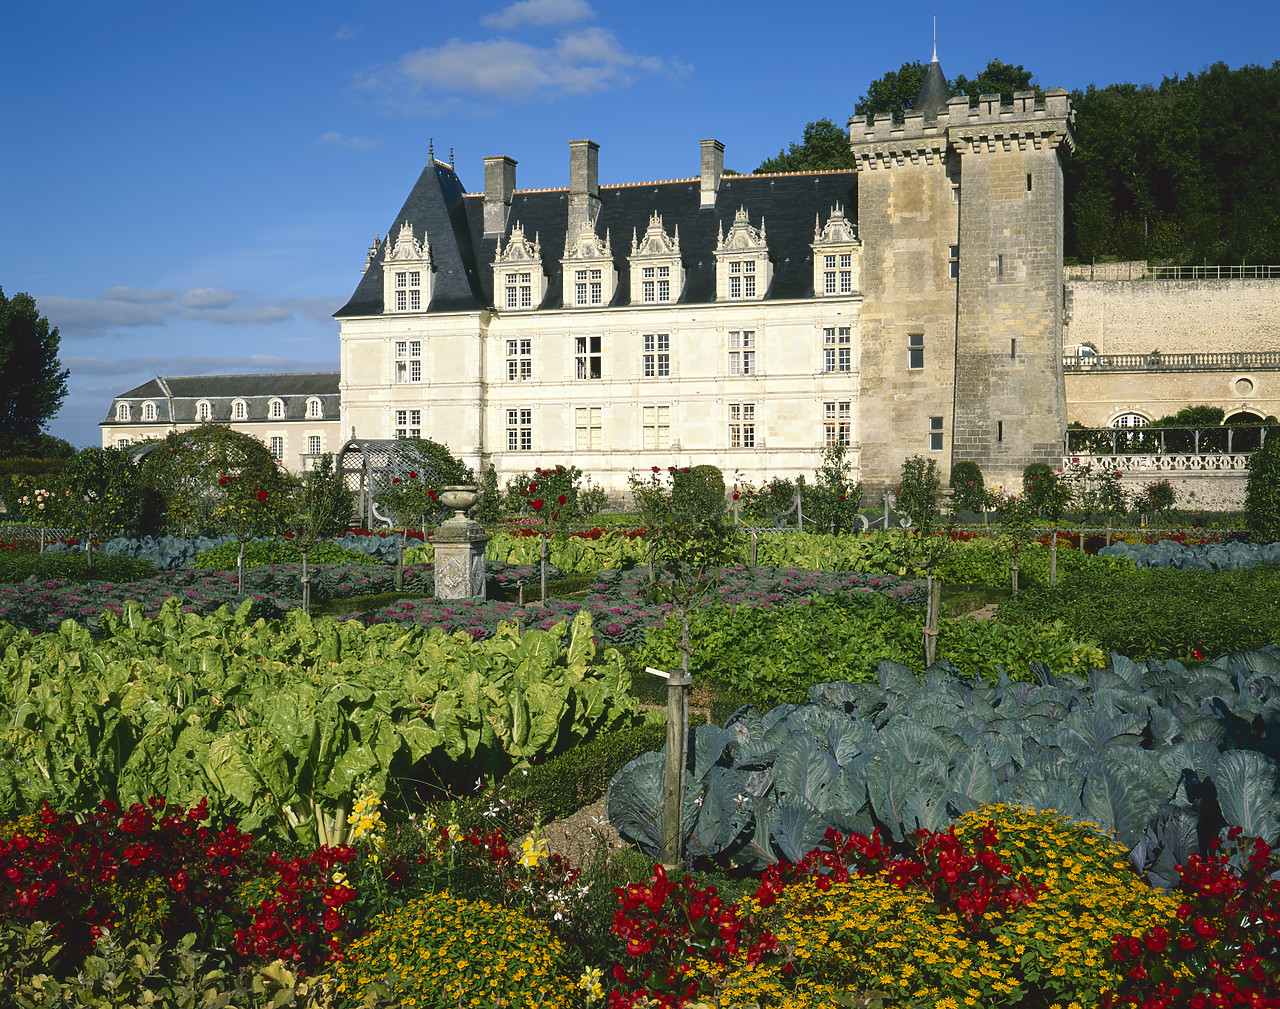 #200286-1 - Chateau Villandry, Loire Valley, France